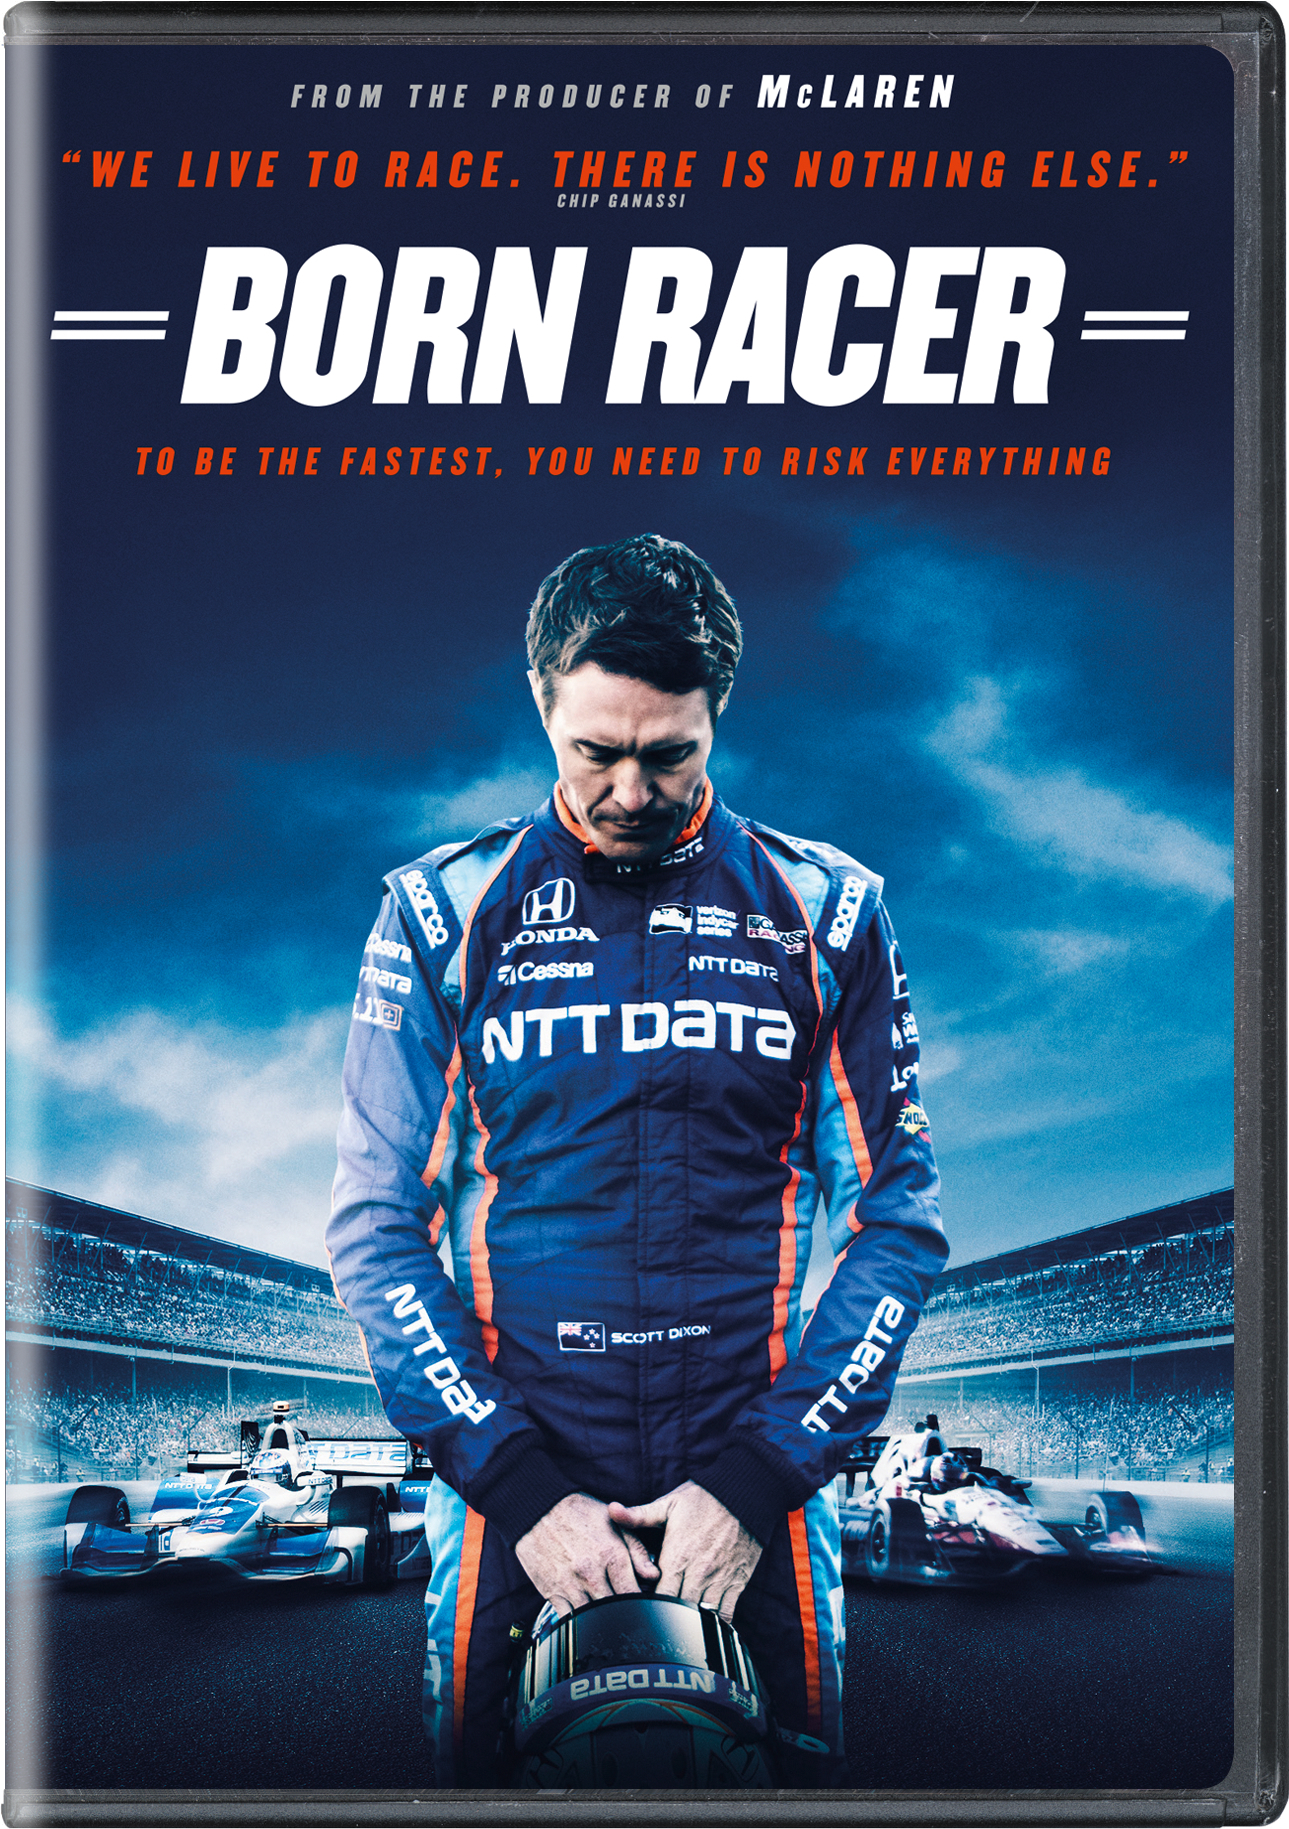 Born Racer - DVD [ 2018 ]  - Documentaries On DVD